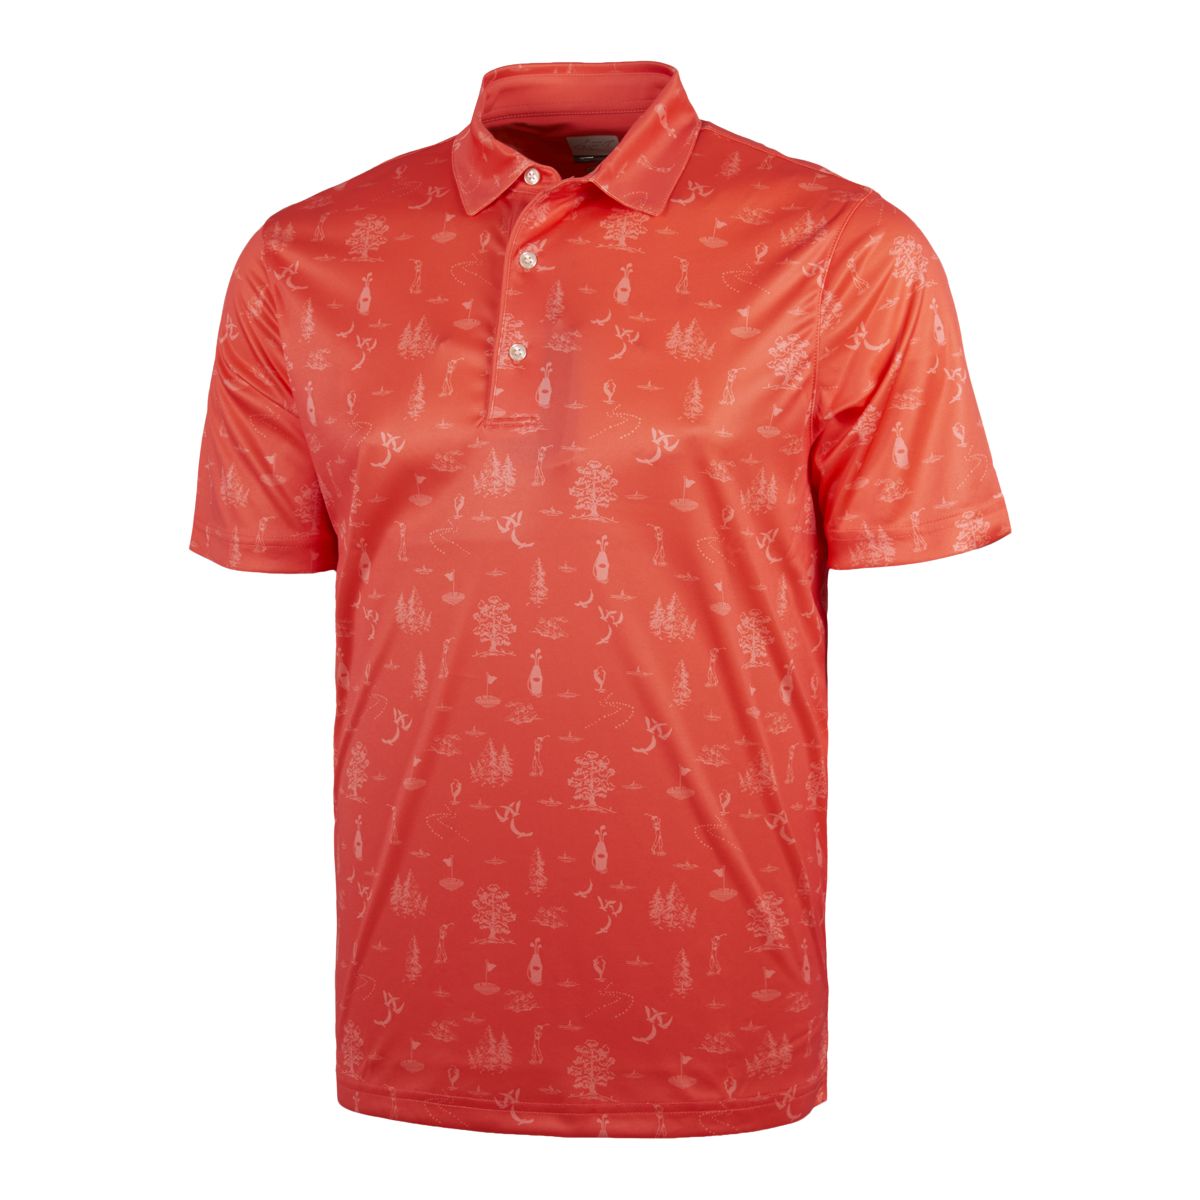 Greg Norman Golf Men's Ml75 Toile Print Polo T Shirt